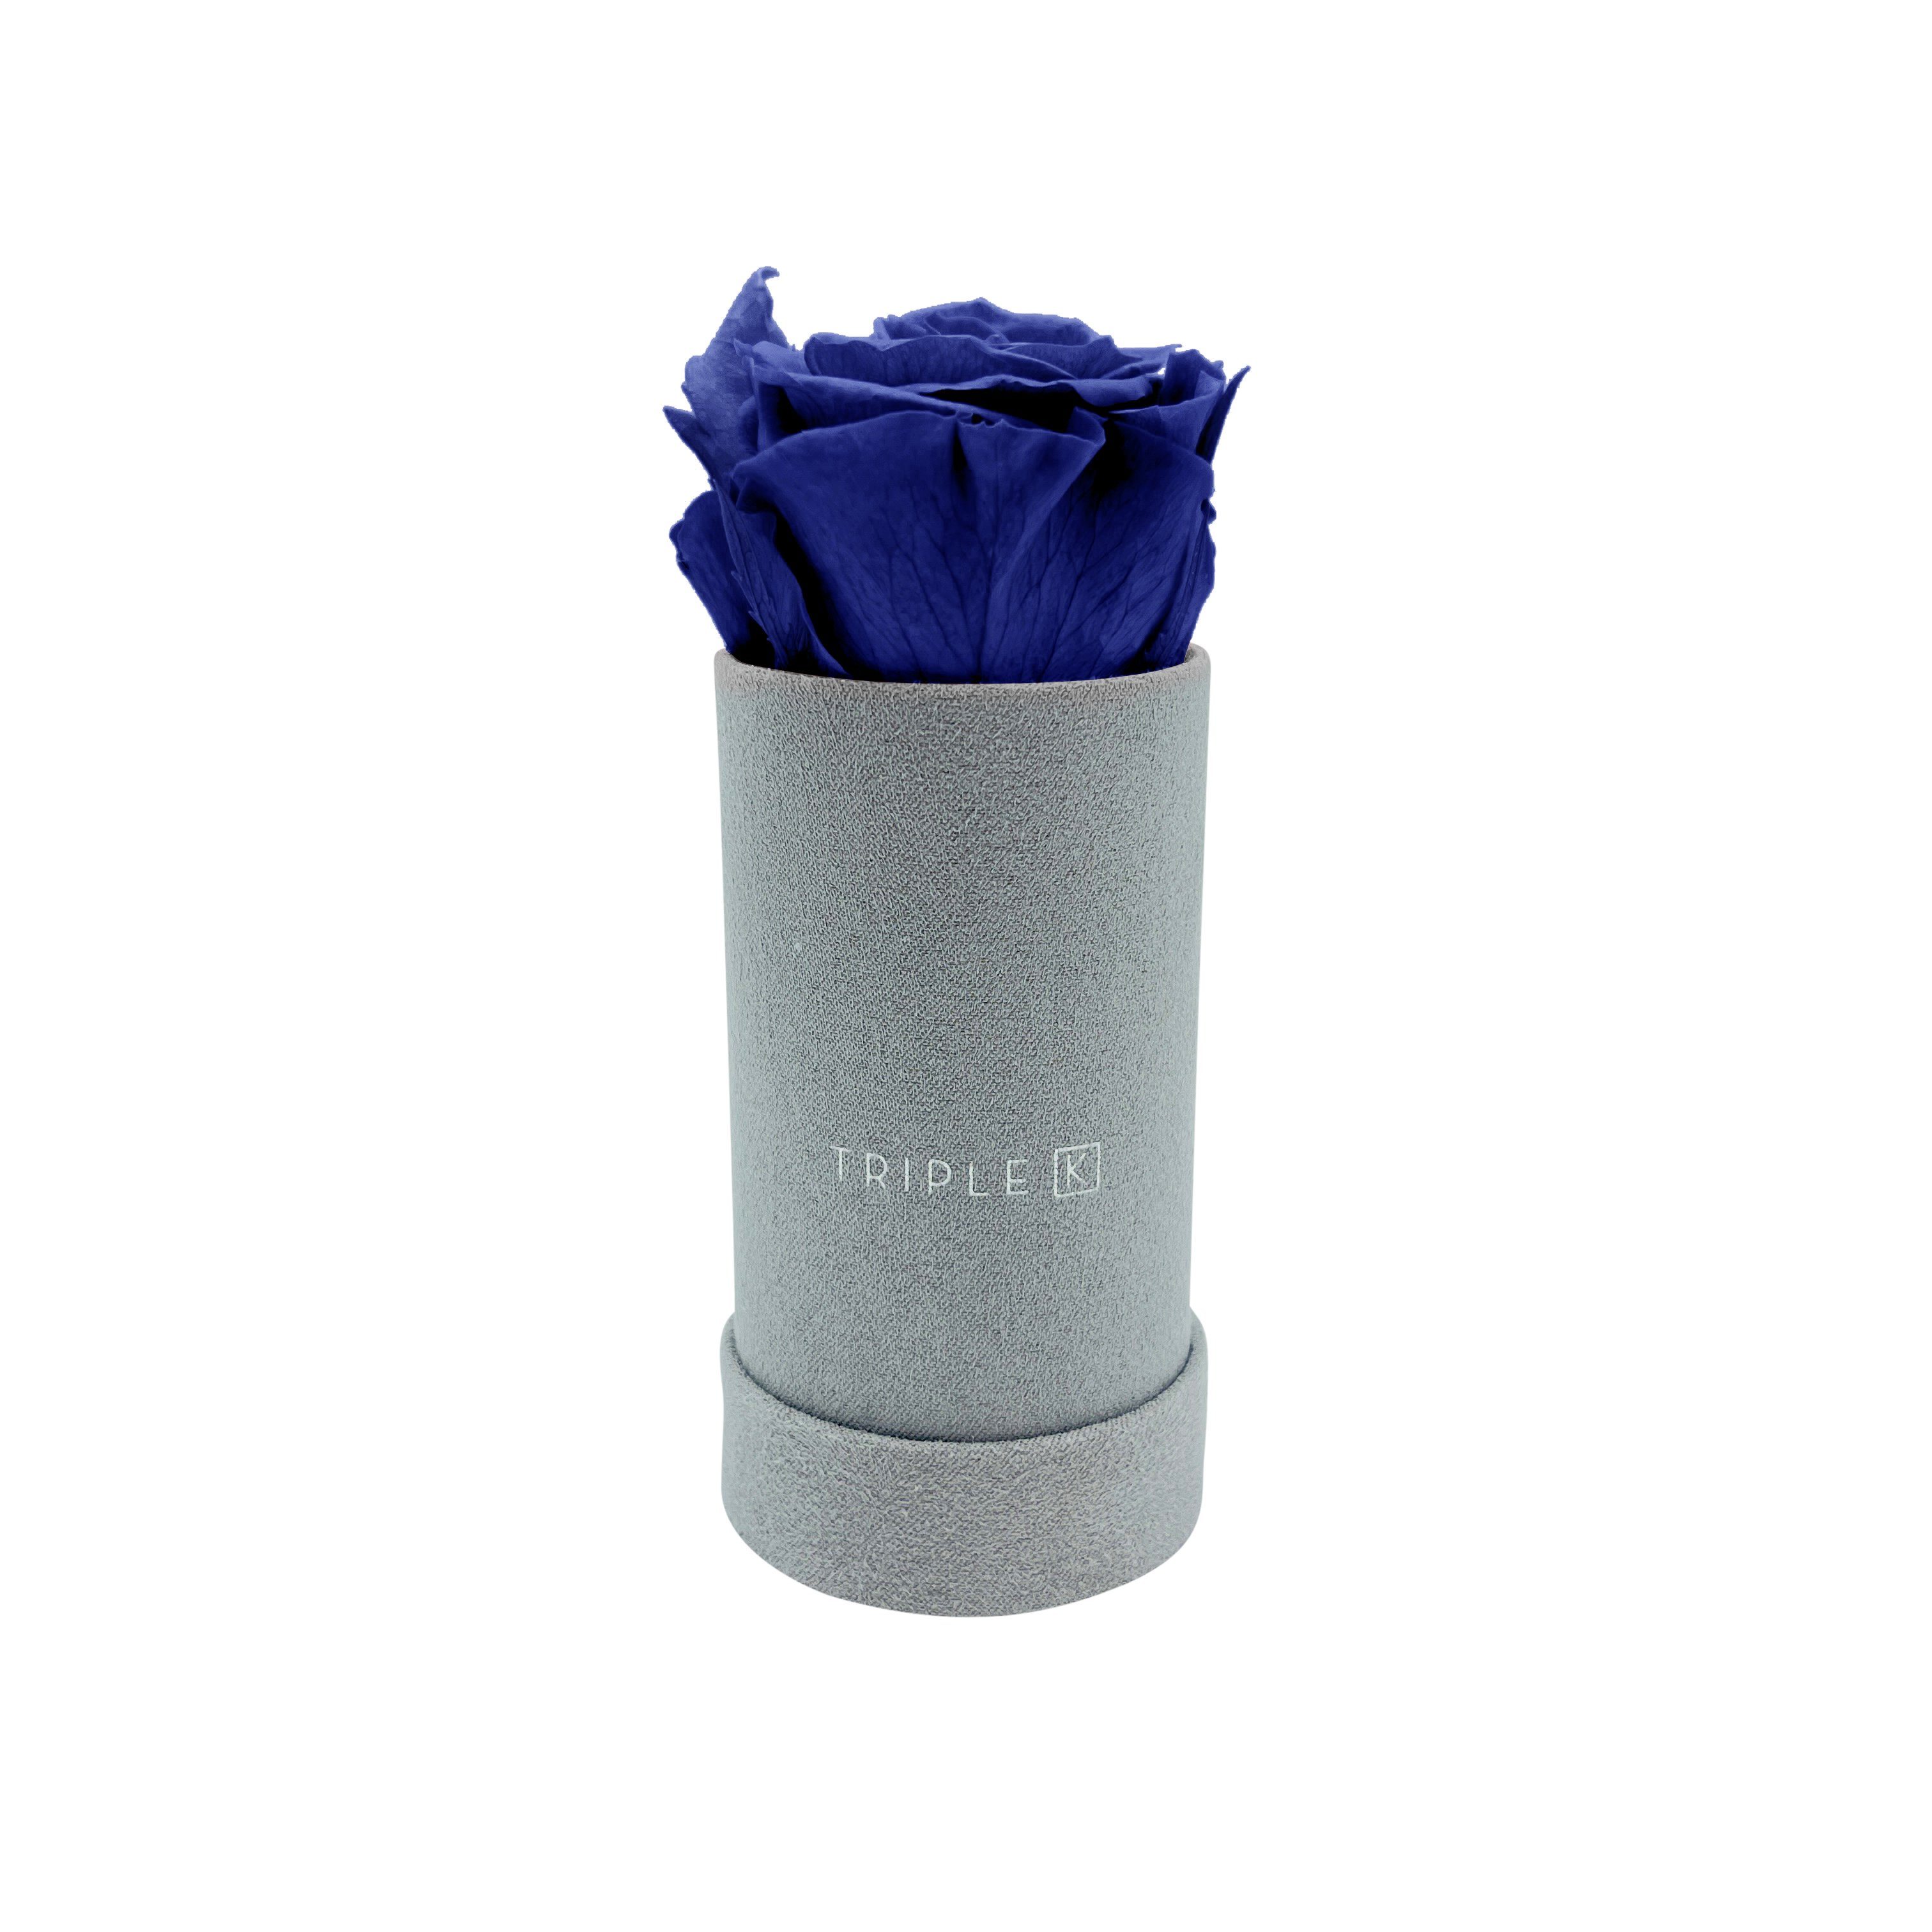 Kunstblume TRIPLE K mit Inkl. Flowerbox Jahre - Blumenbox Haltbar, bis Grußkarte TRIPLE Blau Rose, mit 3 Infinity Velvet Rosen, Infinity K konservierten Rosen, Rosenbox